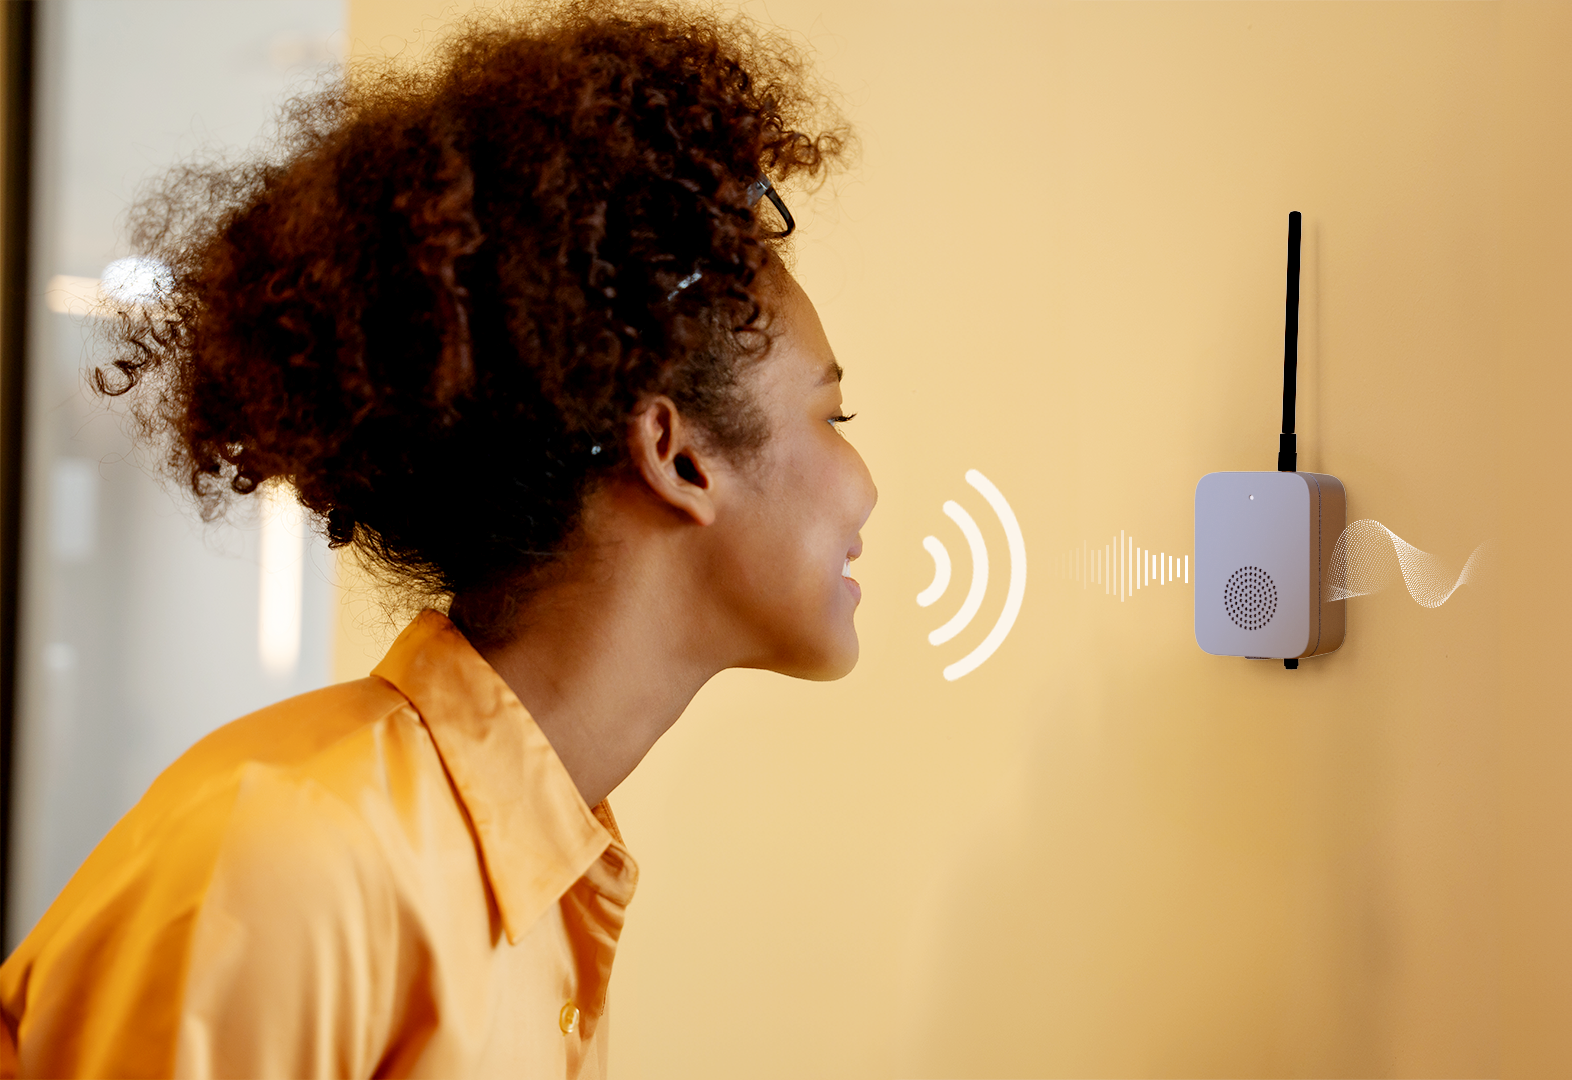 IoT Audio Explained: Sound Detection, Voice Recognition, & Voice Processing